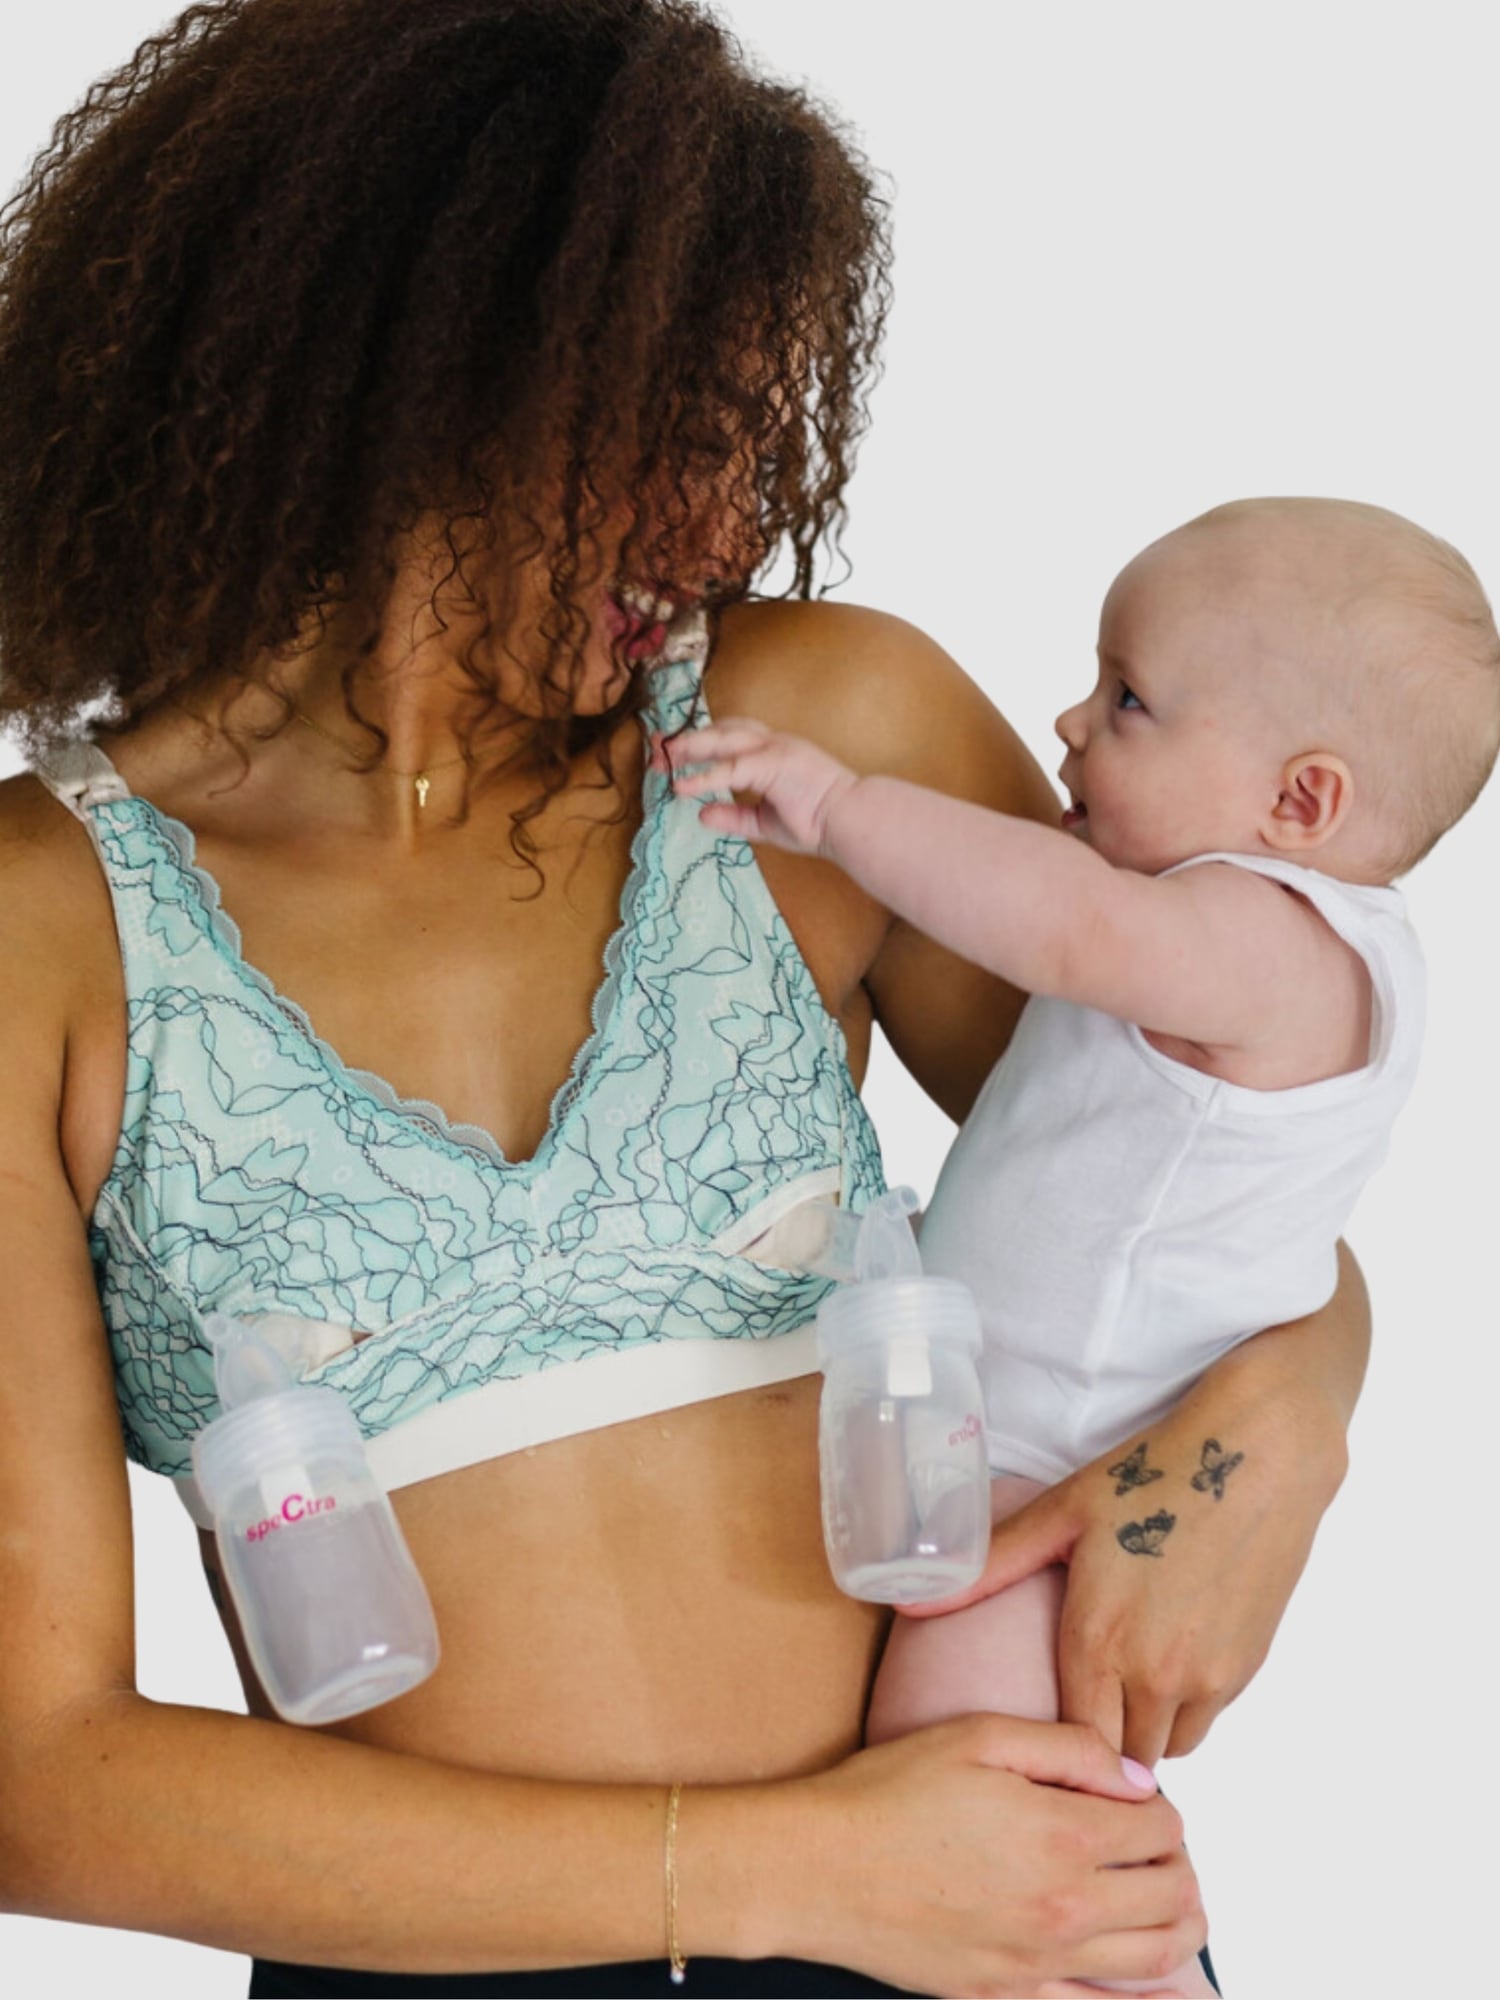 Dairy Fairy: Rose Pumping and Nursing Bra — Breastfeeding Center